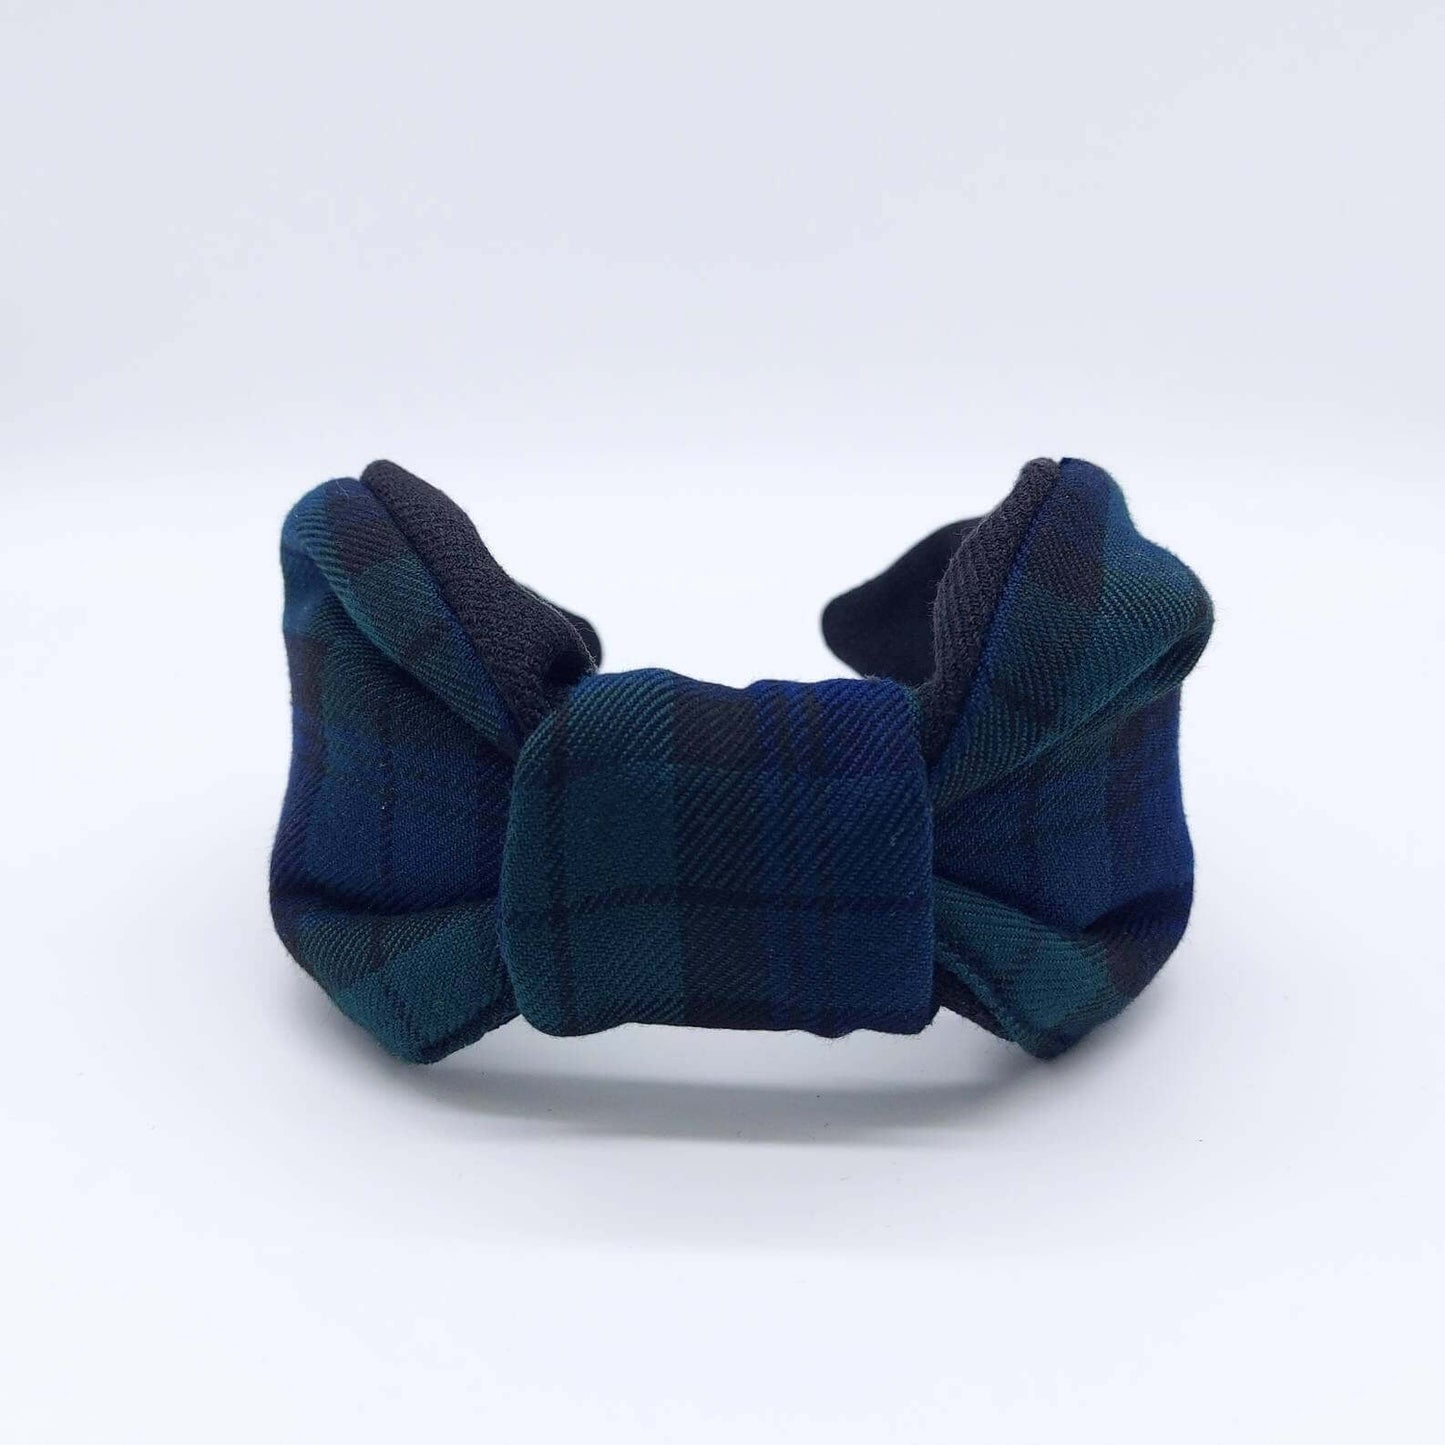 A bow-style, black and navy blue tartan plaid fabric headband with plain black lining underneath.